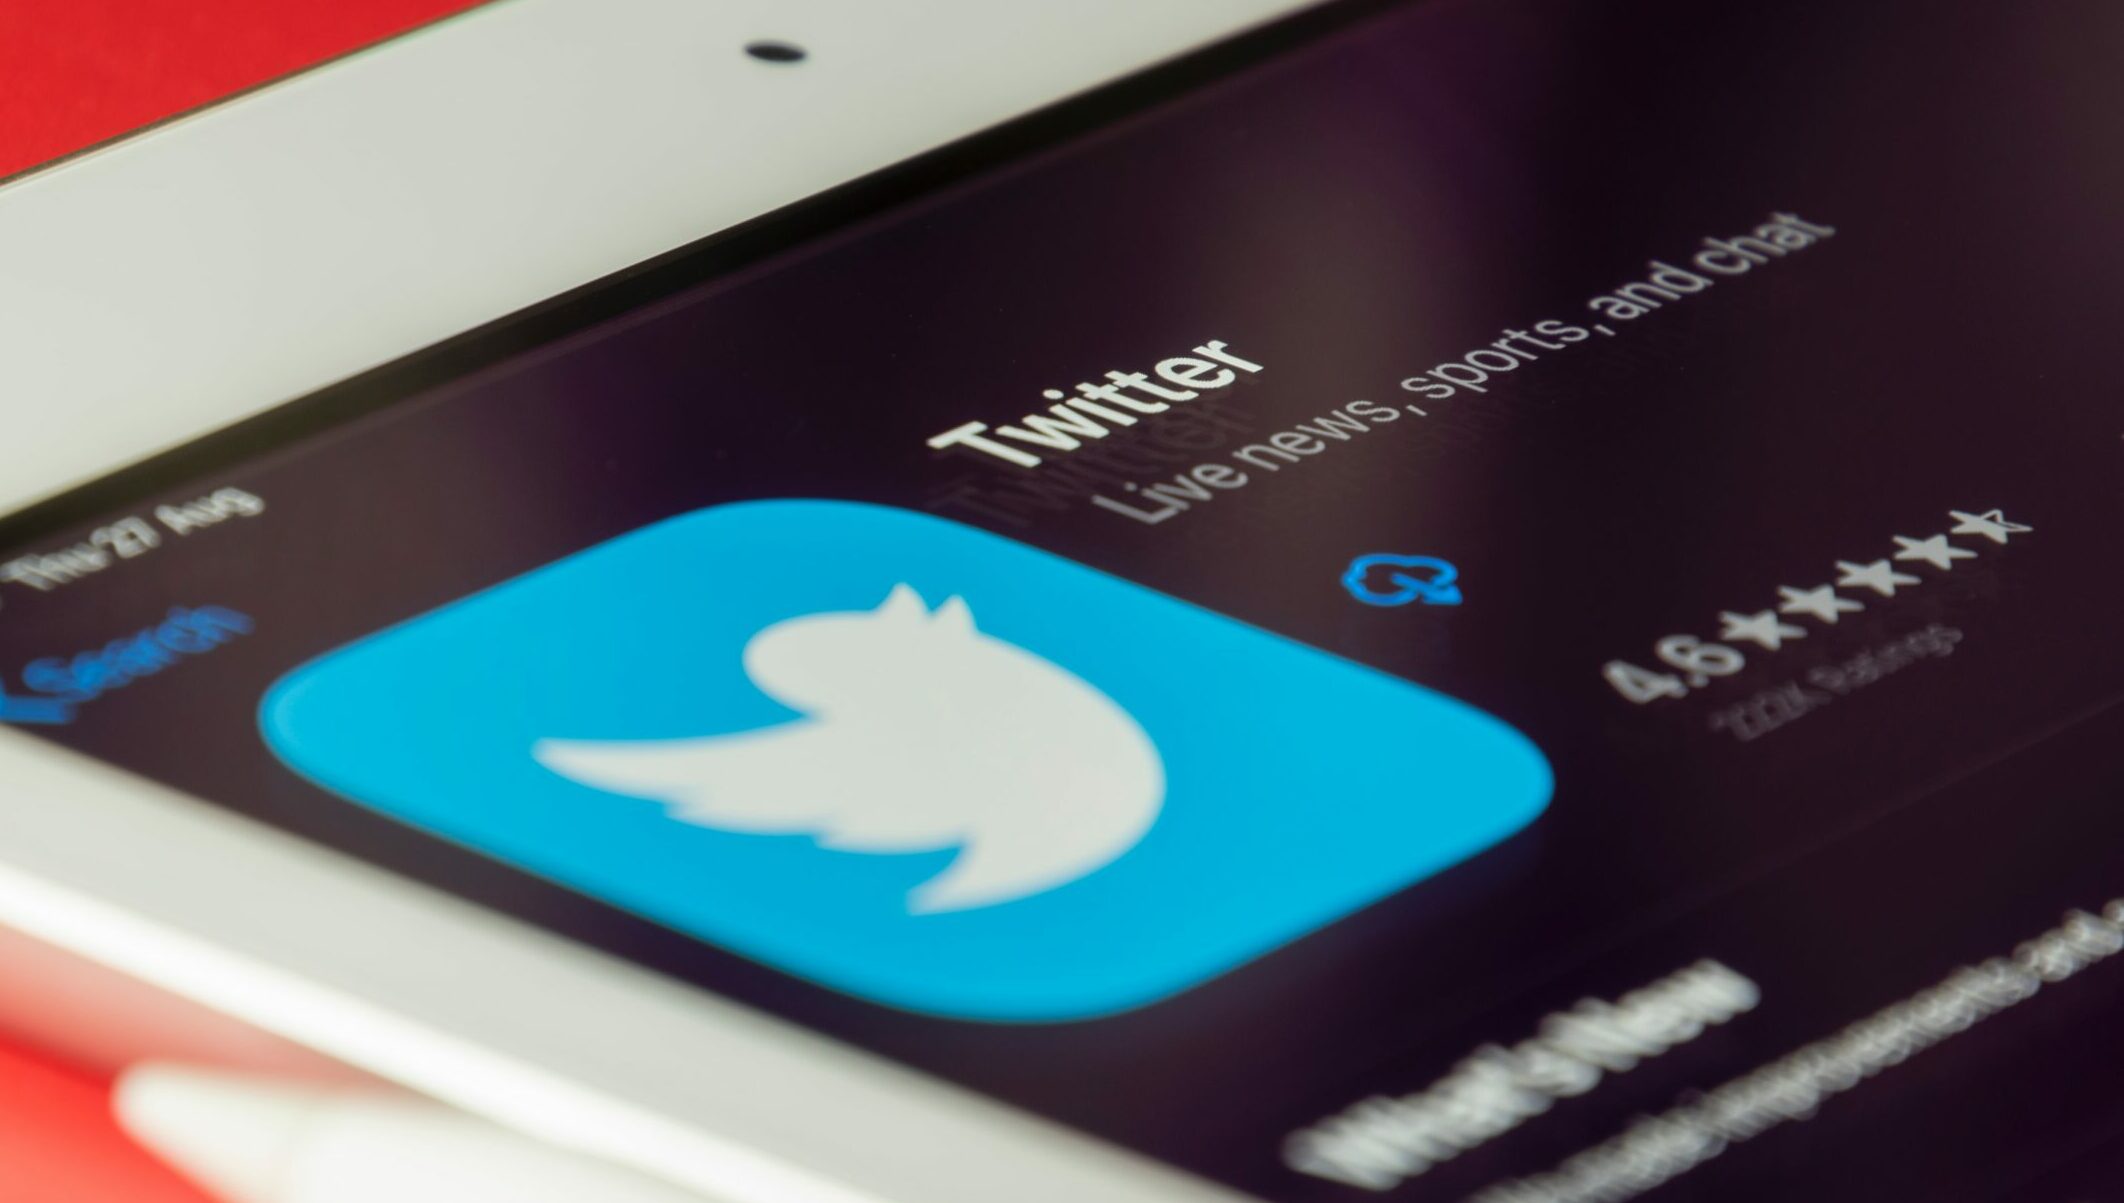 Twitter lança ferramenta para criar GIFs - Giz Brasil